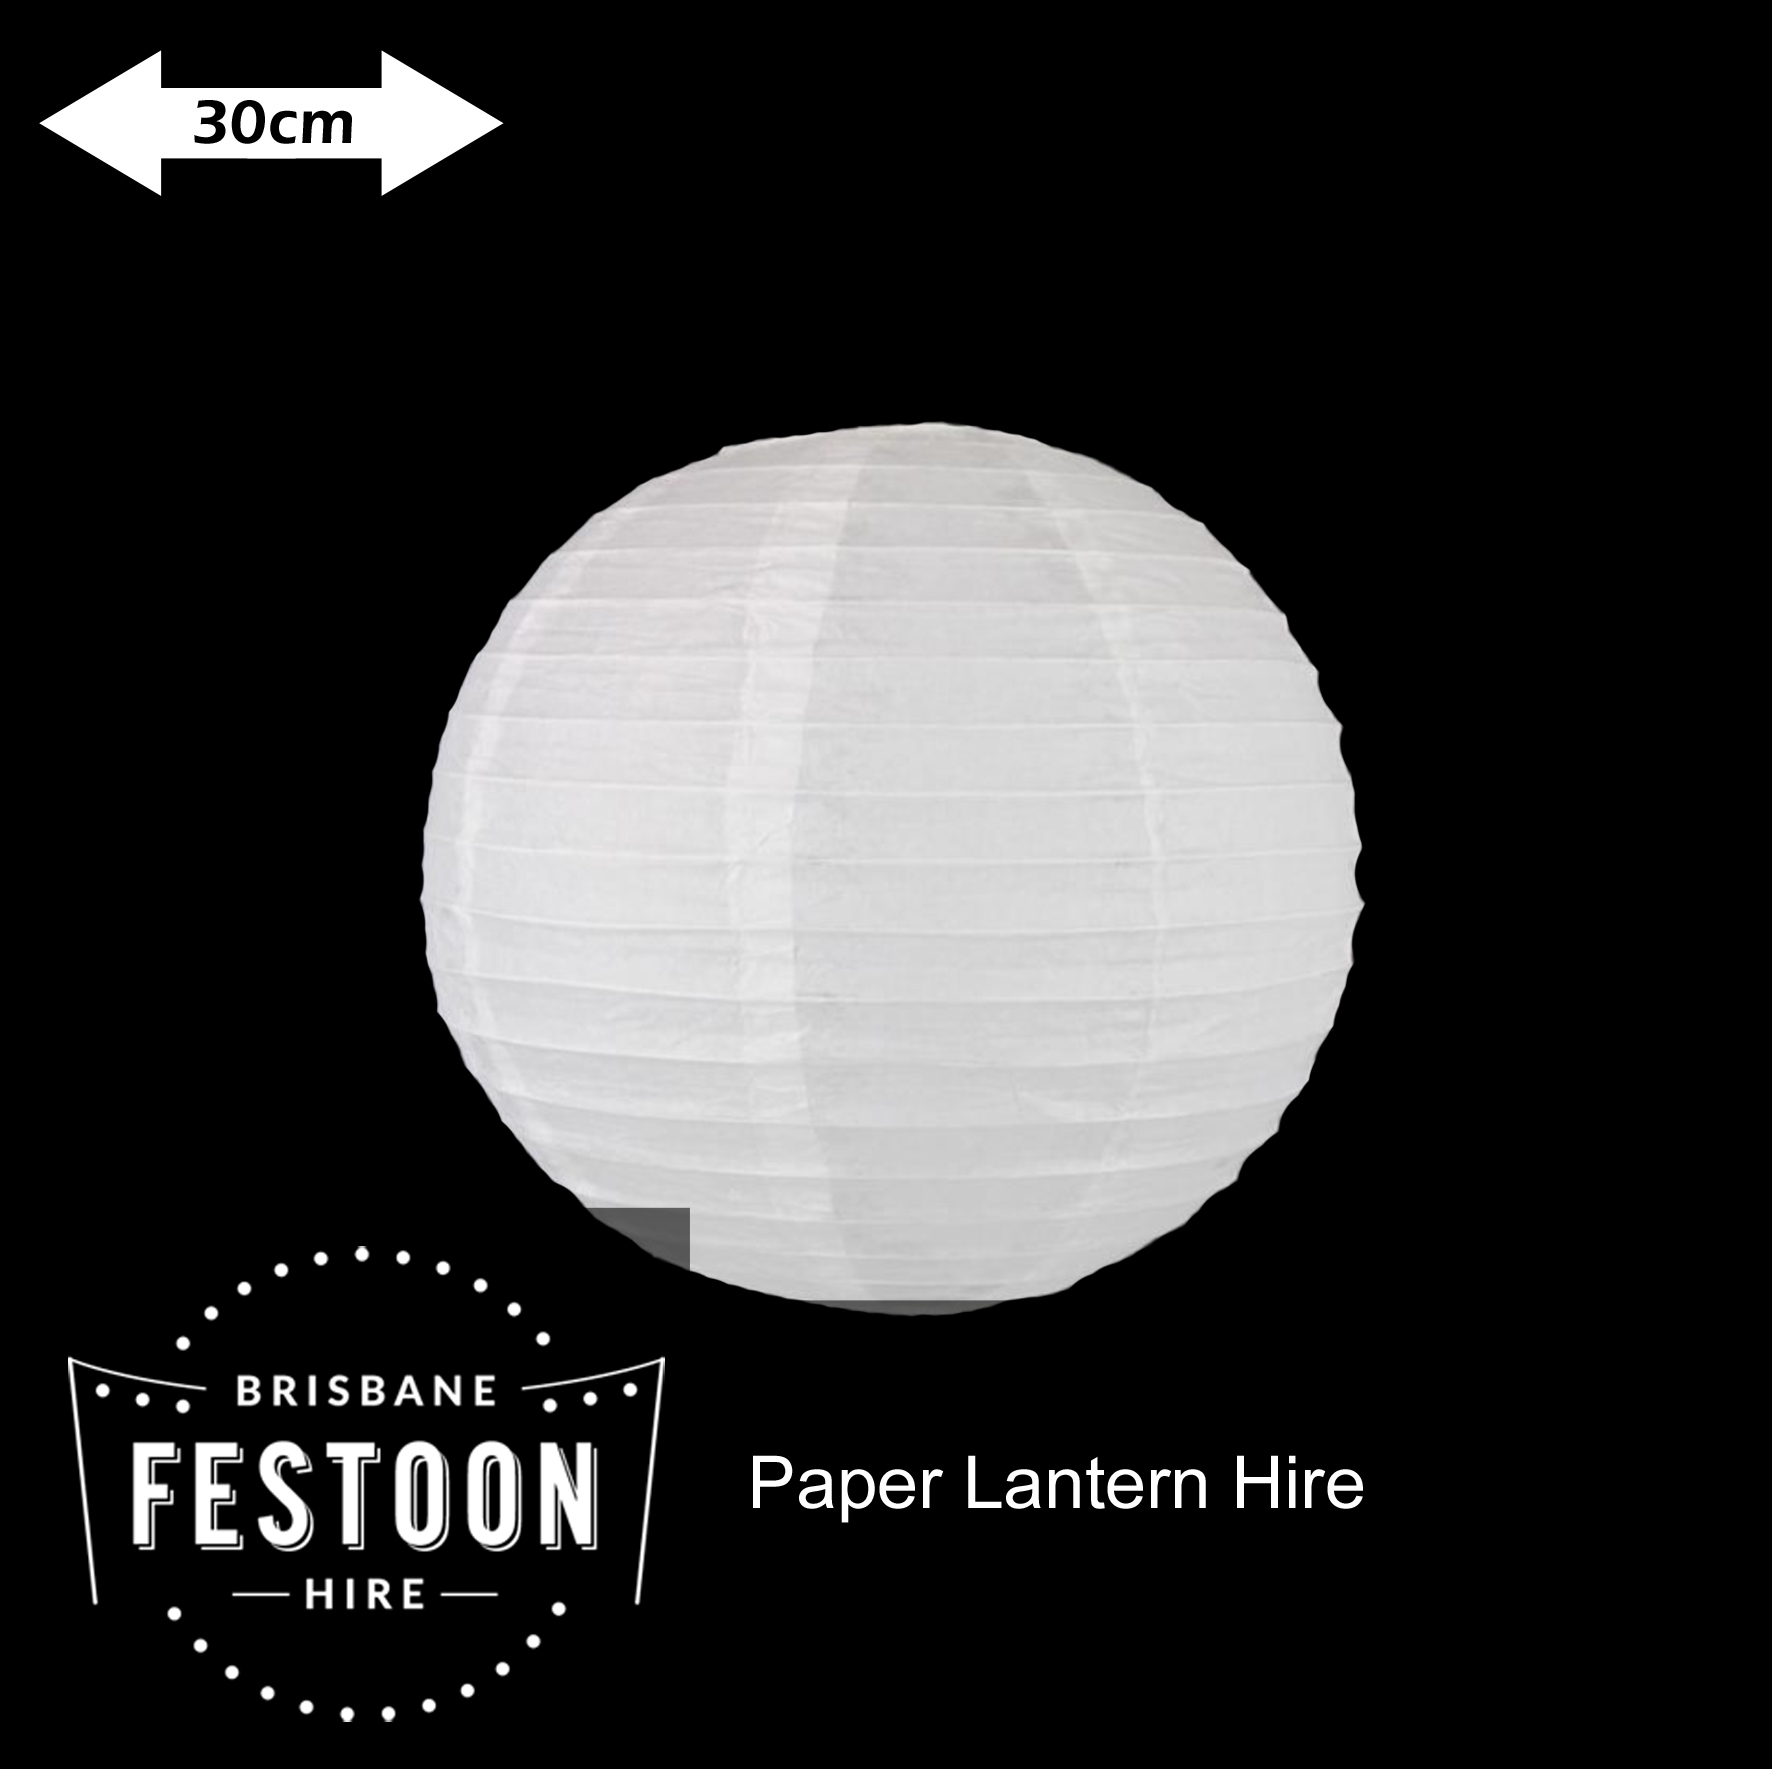 Brisbane Festoon Hire - 30cm Paper Lantern Hire 3.jpg